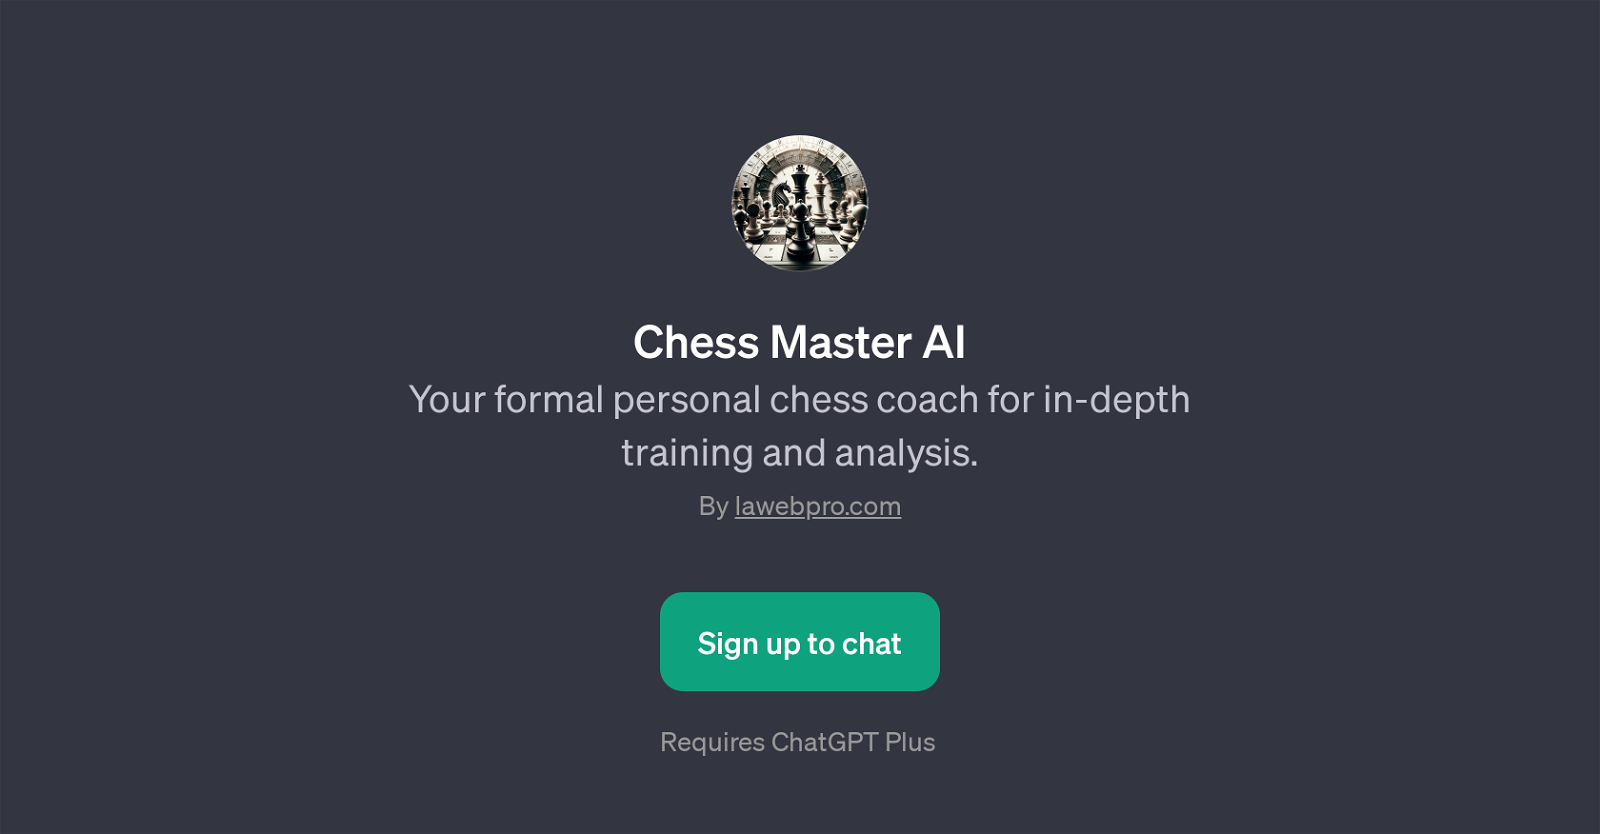 Chess Master AI website